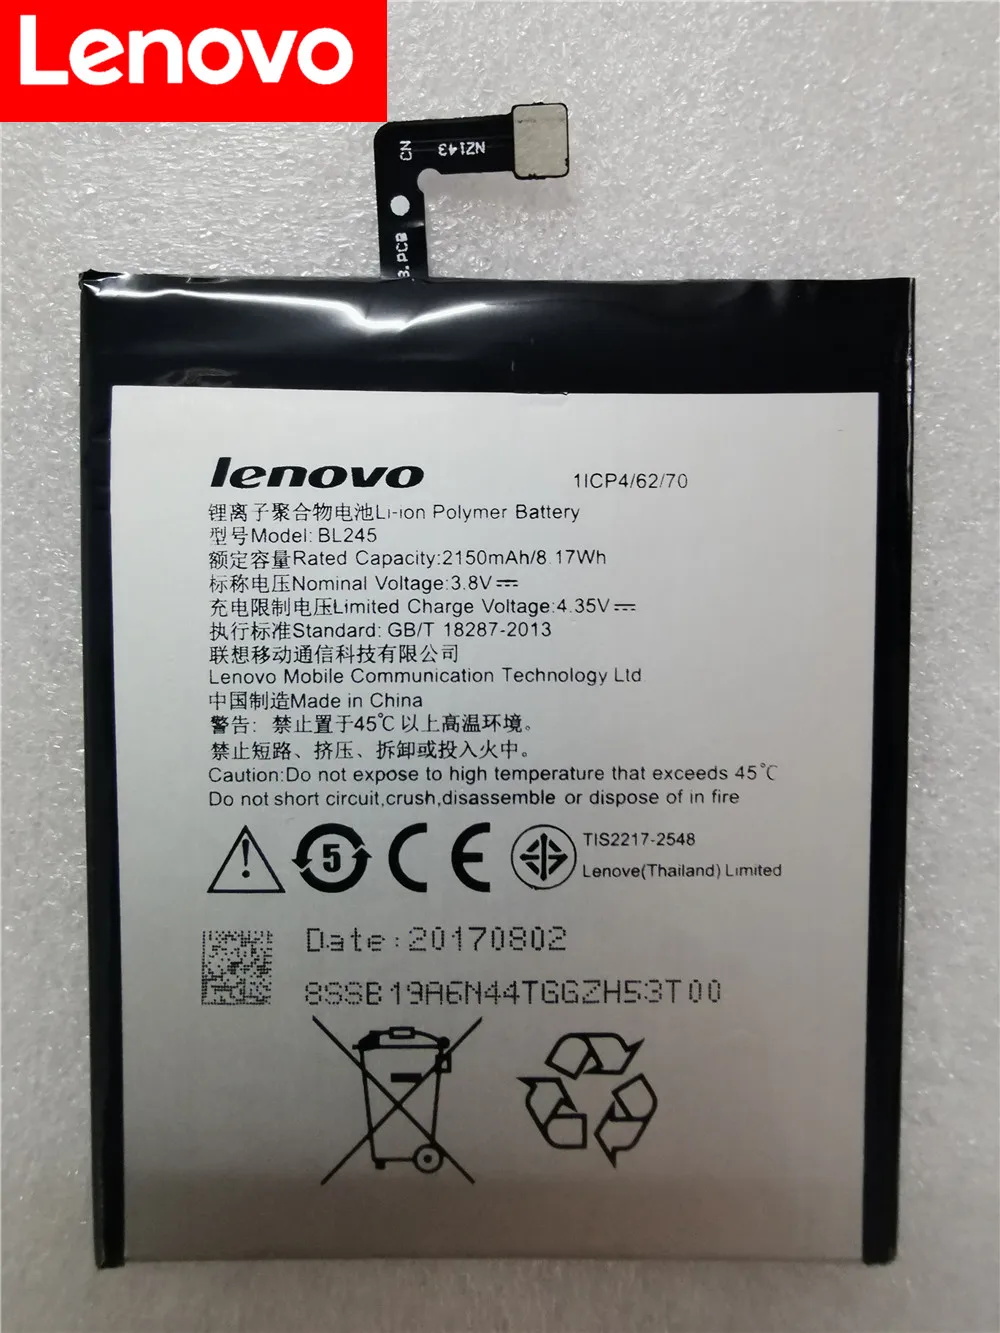 

For Lenovo S60 Battery 100% New High Quality 2150mAh Battery Replacement Backup Battery For Lenovo S60 S60W S60t BL245